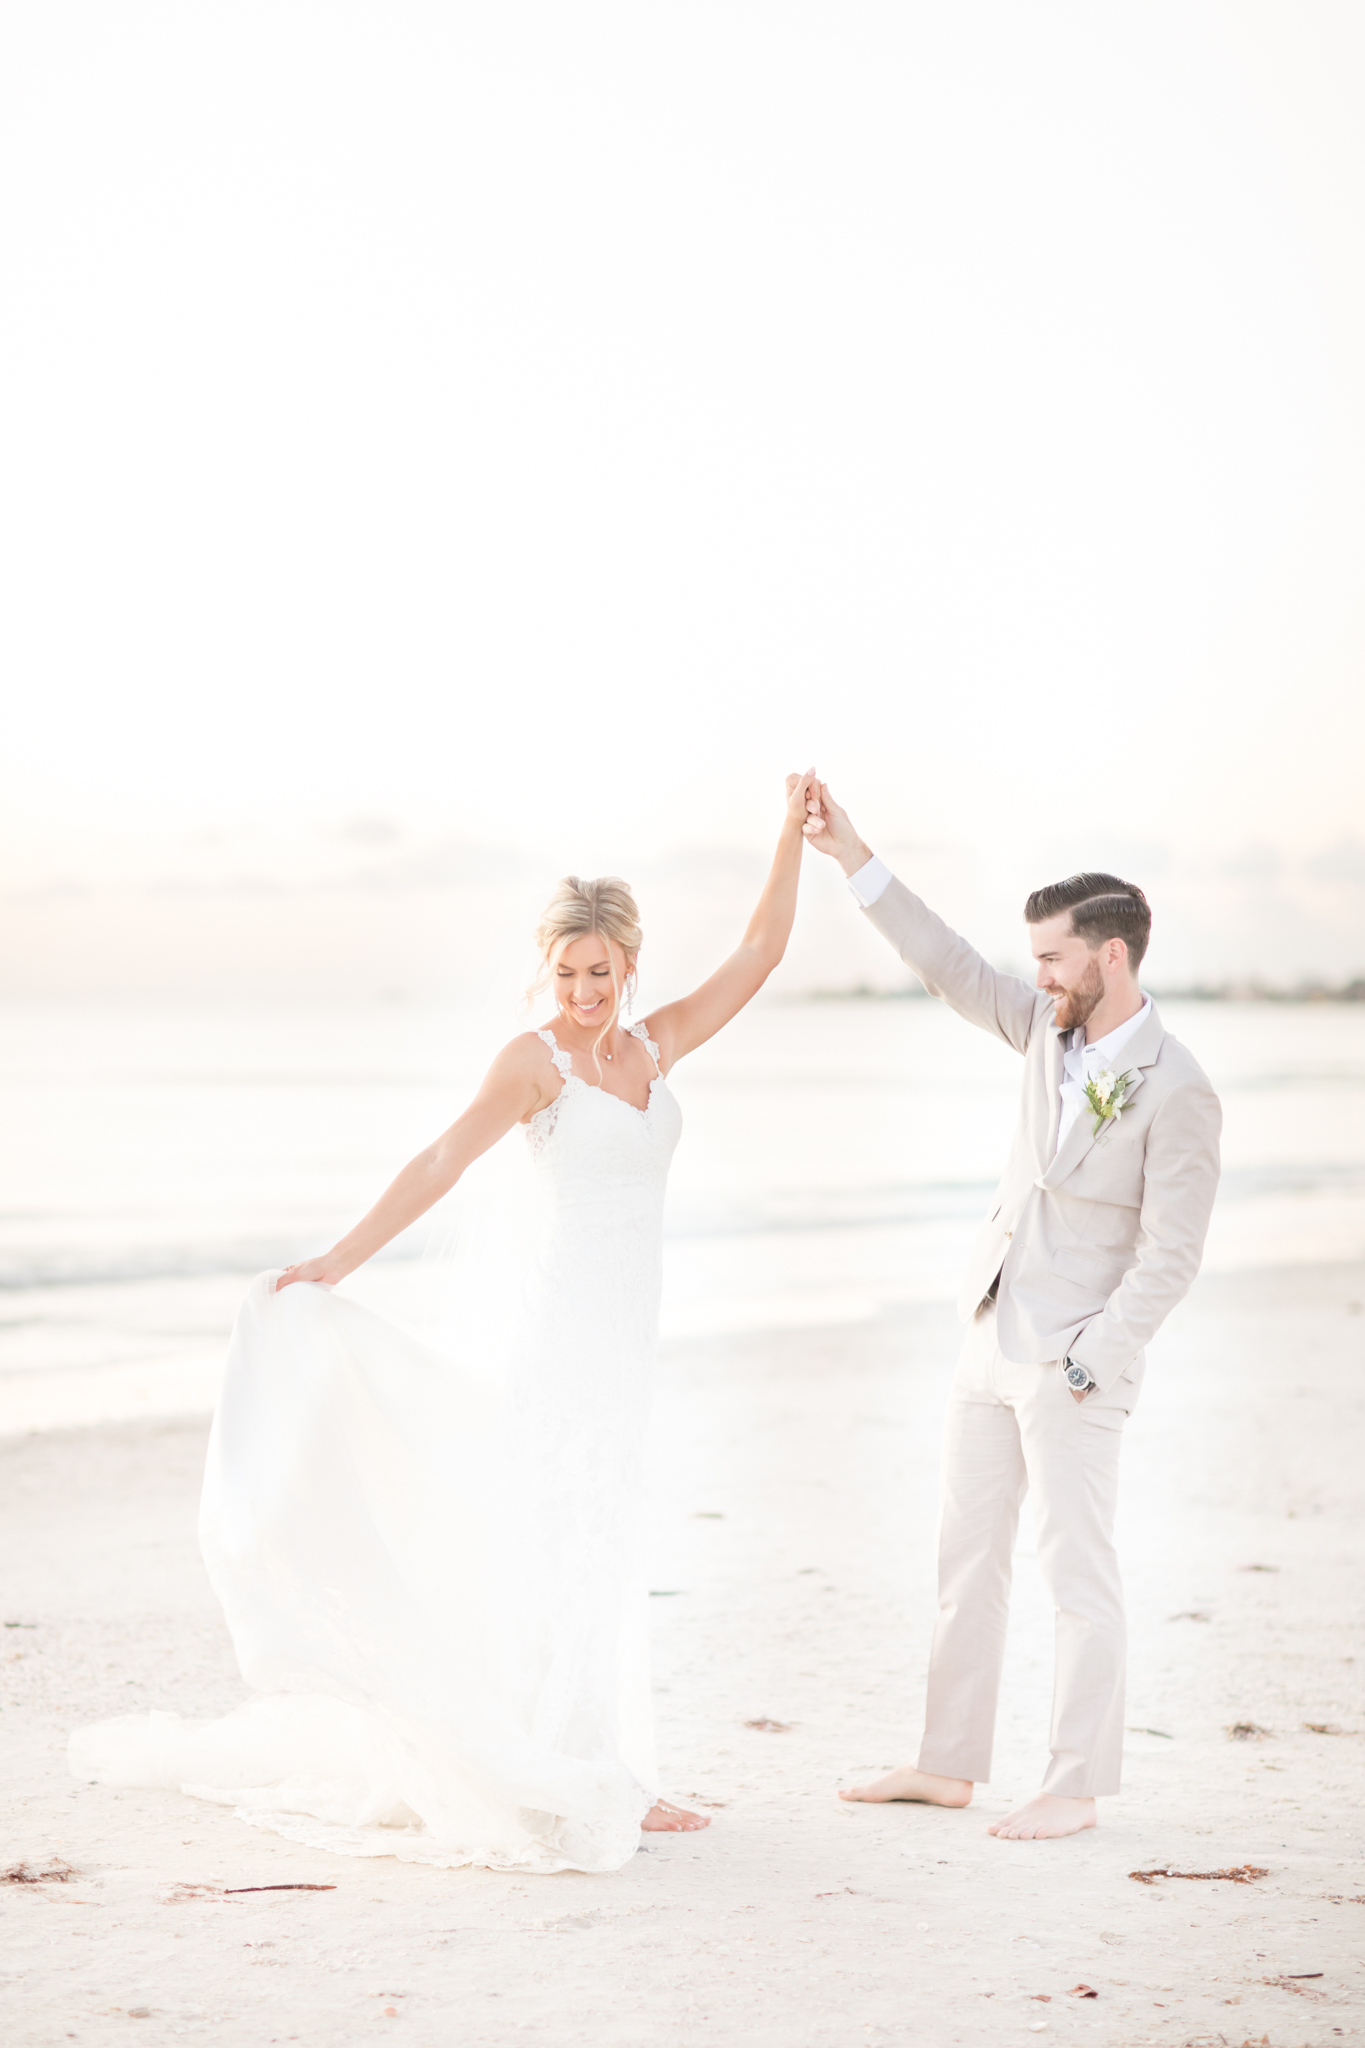 Groom twirls bride on beach.